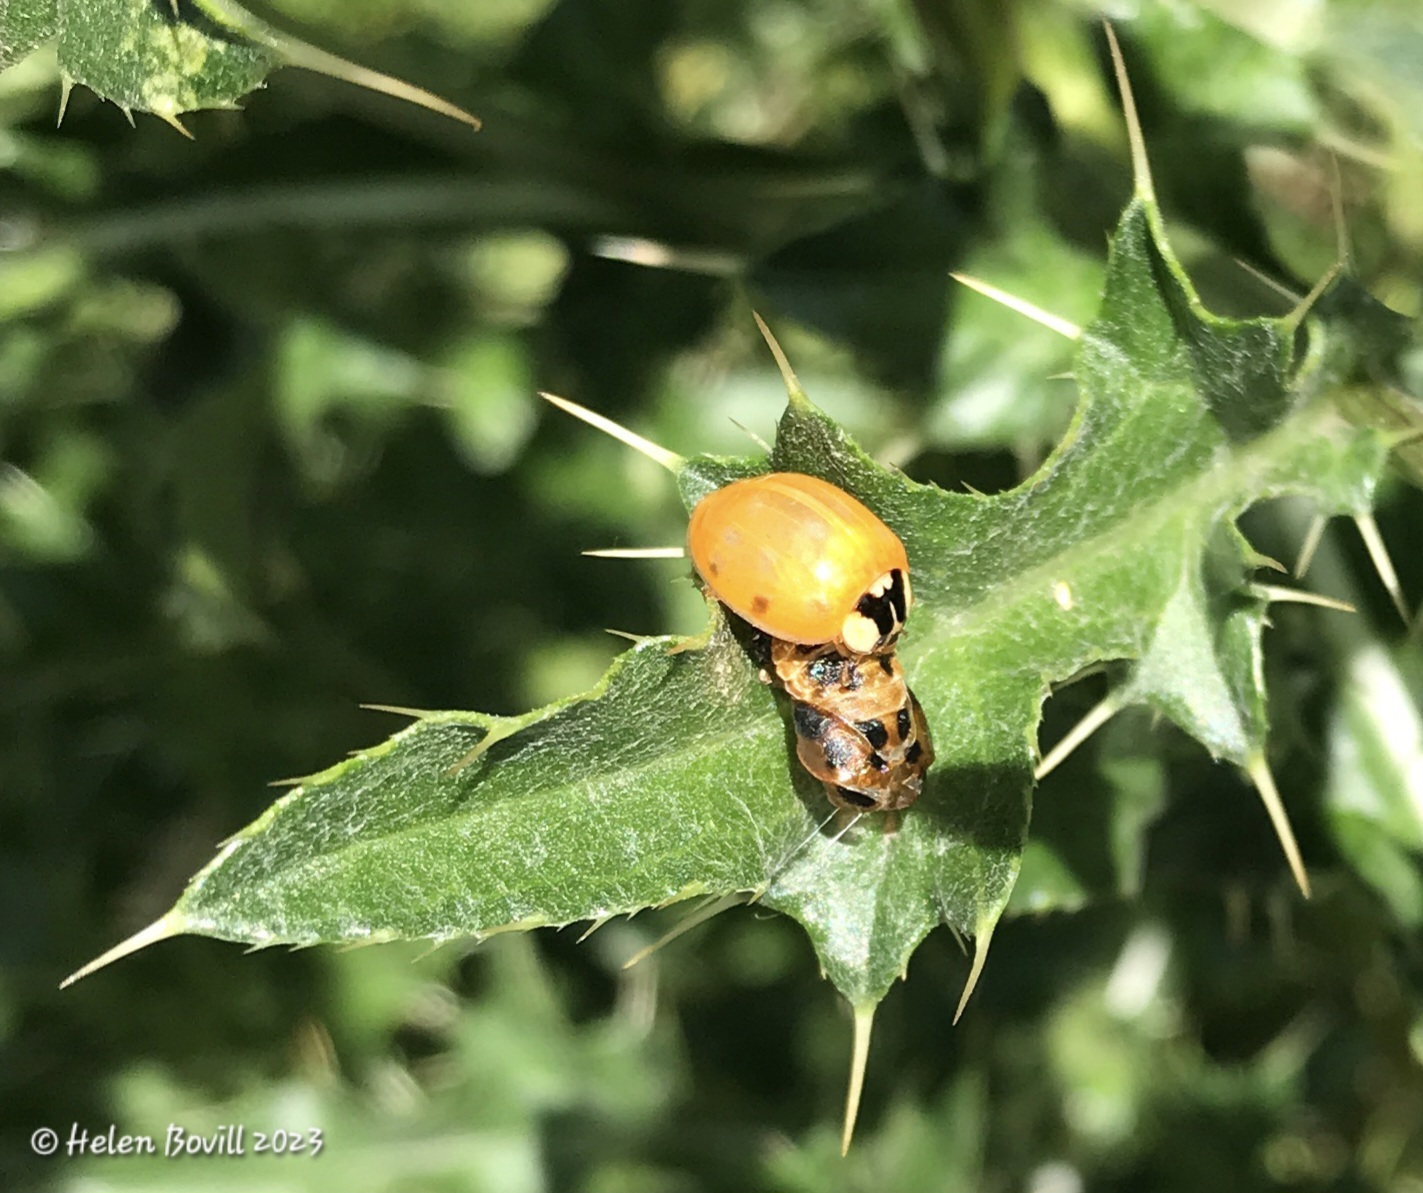 A newly emerged Ladybird on a thistle leaf